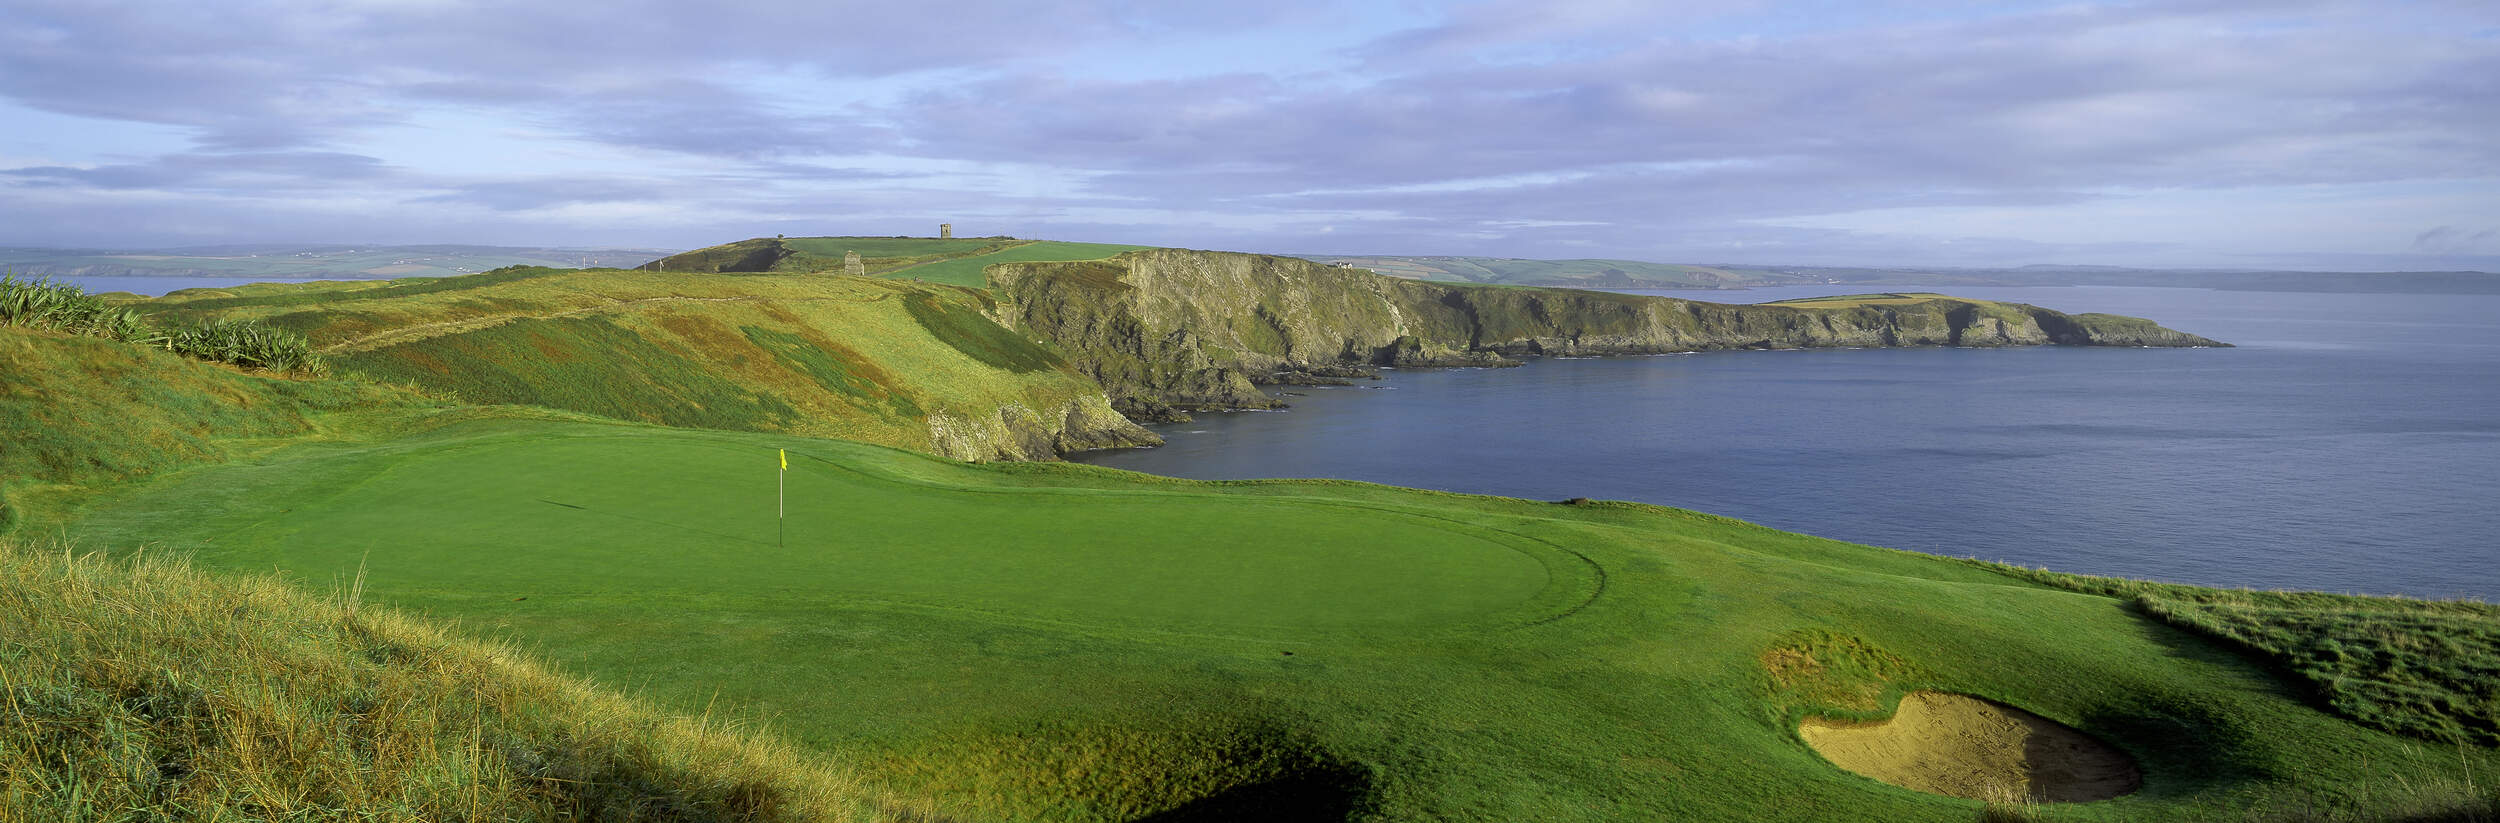 Lahinch Golf Club - County Clare